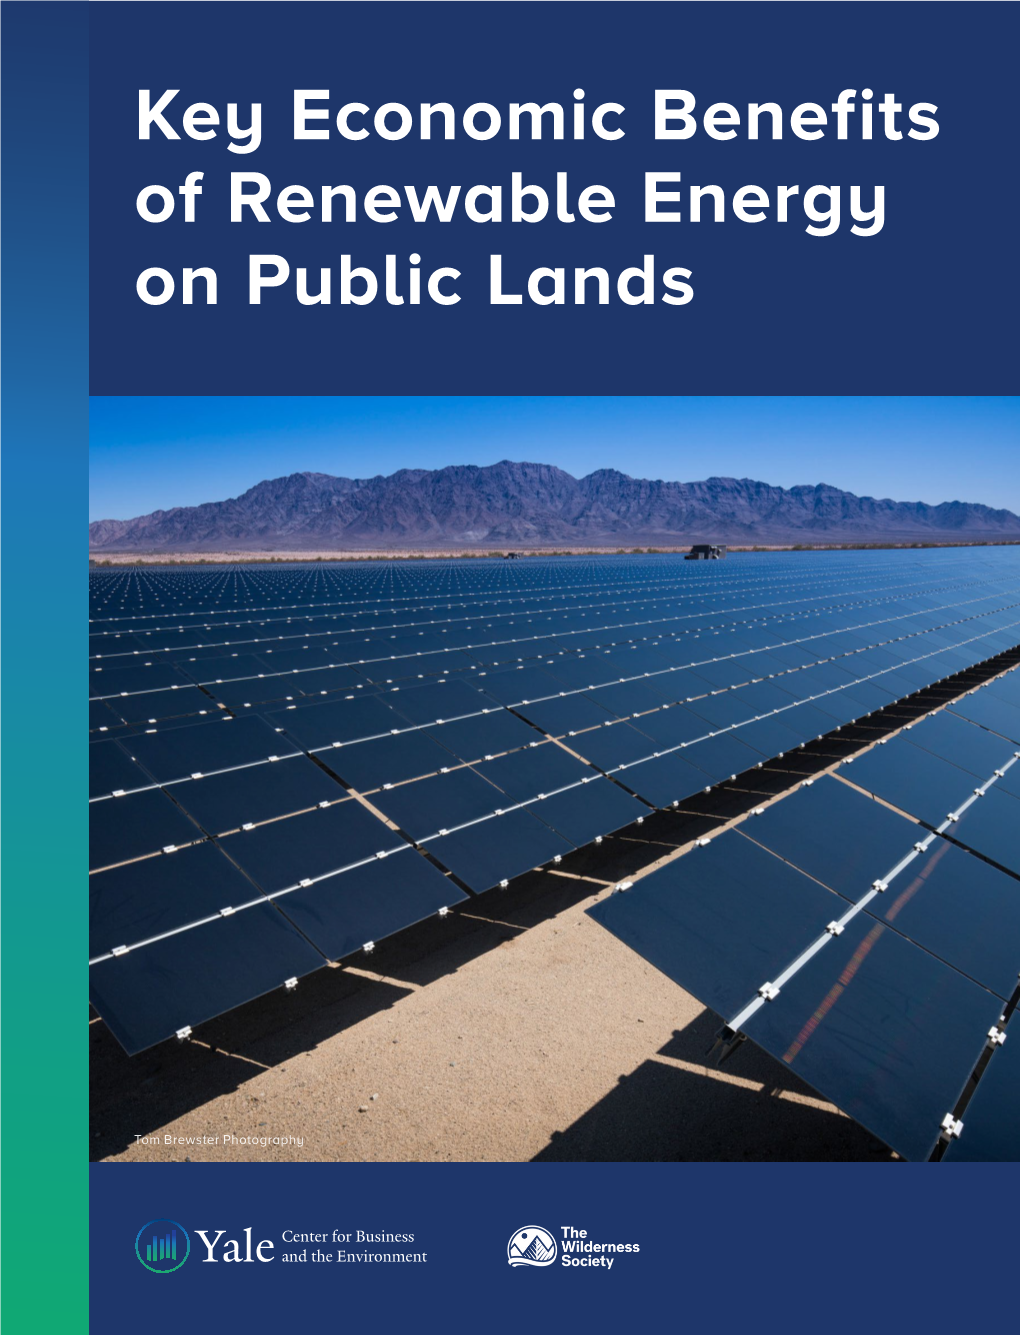 Key Economic Benefits of Renewable Energy on Public Lands